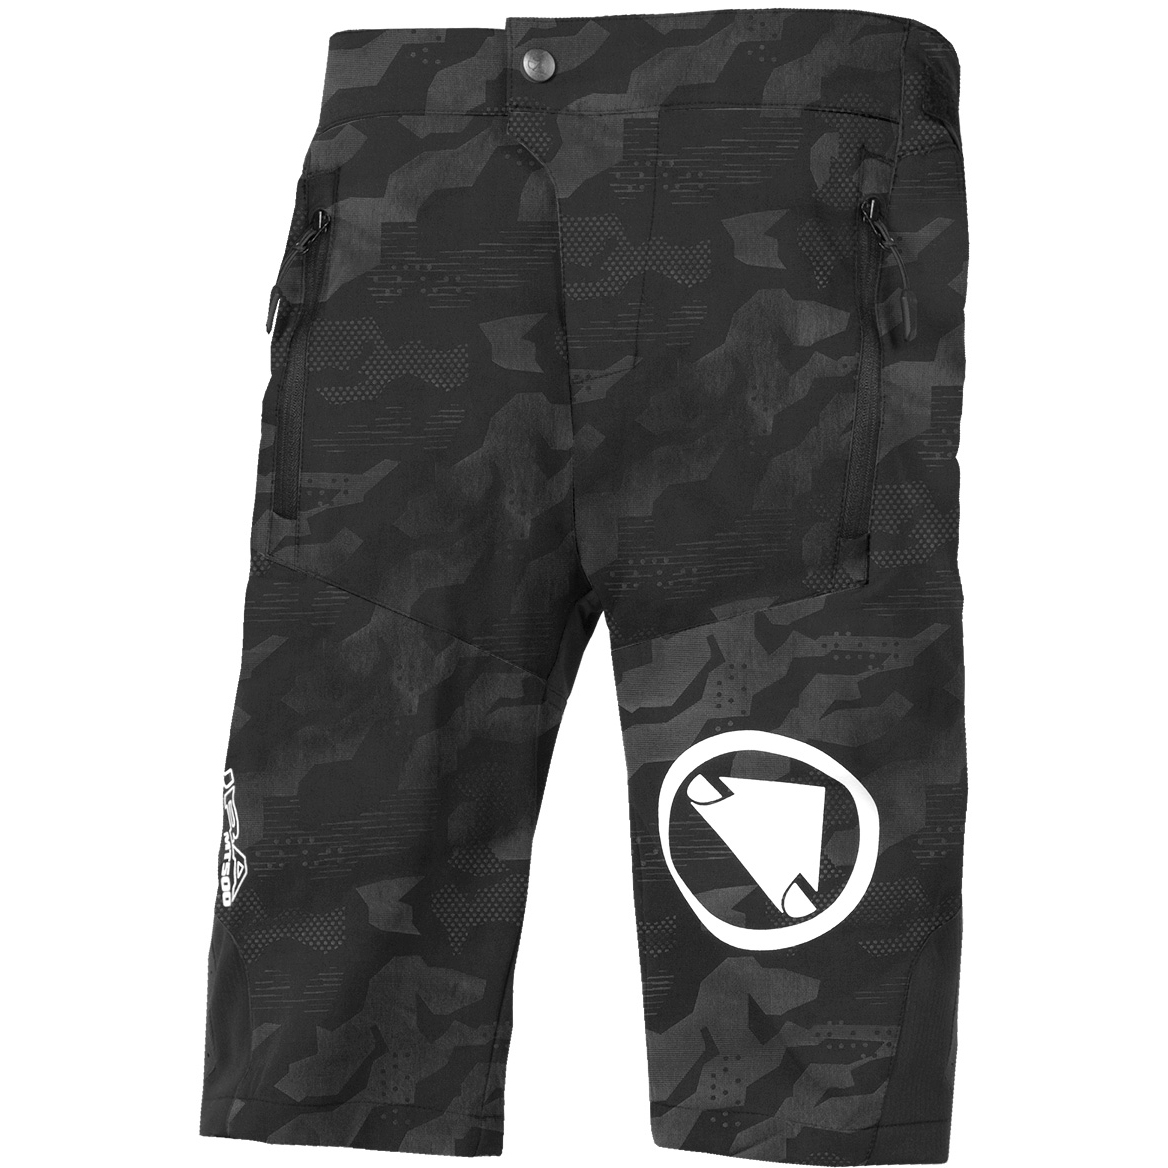 Produktbild von Endura MT500JR Burner Kinder Shorts - camouflage-dunkel